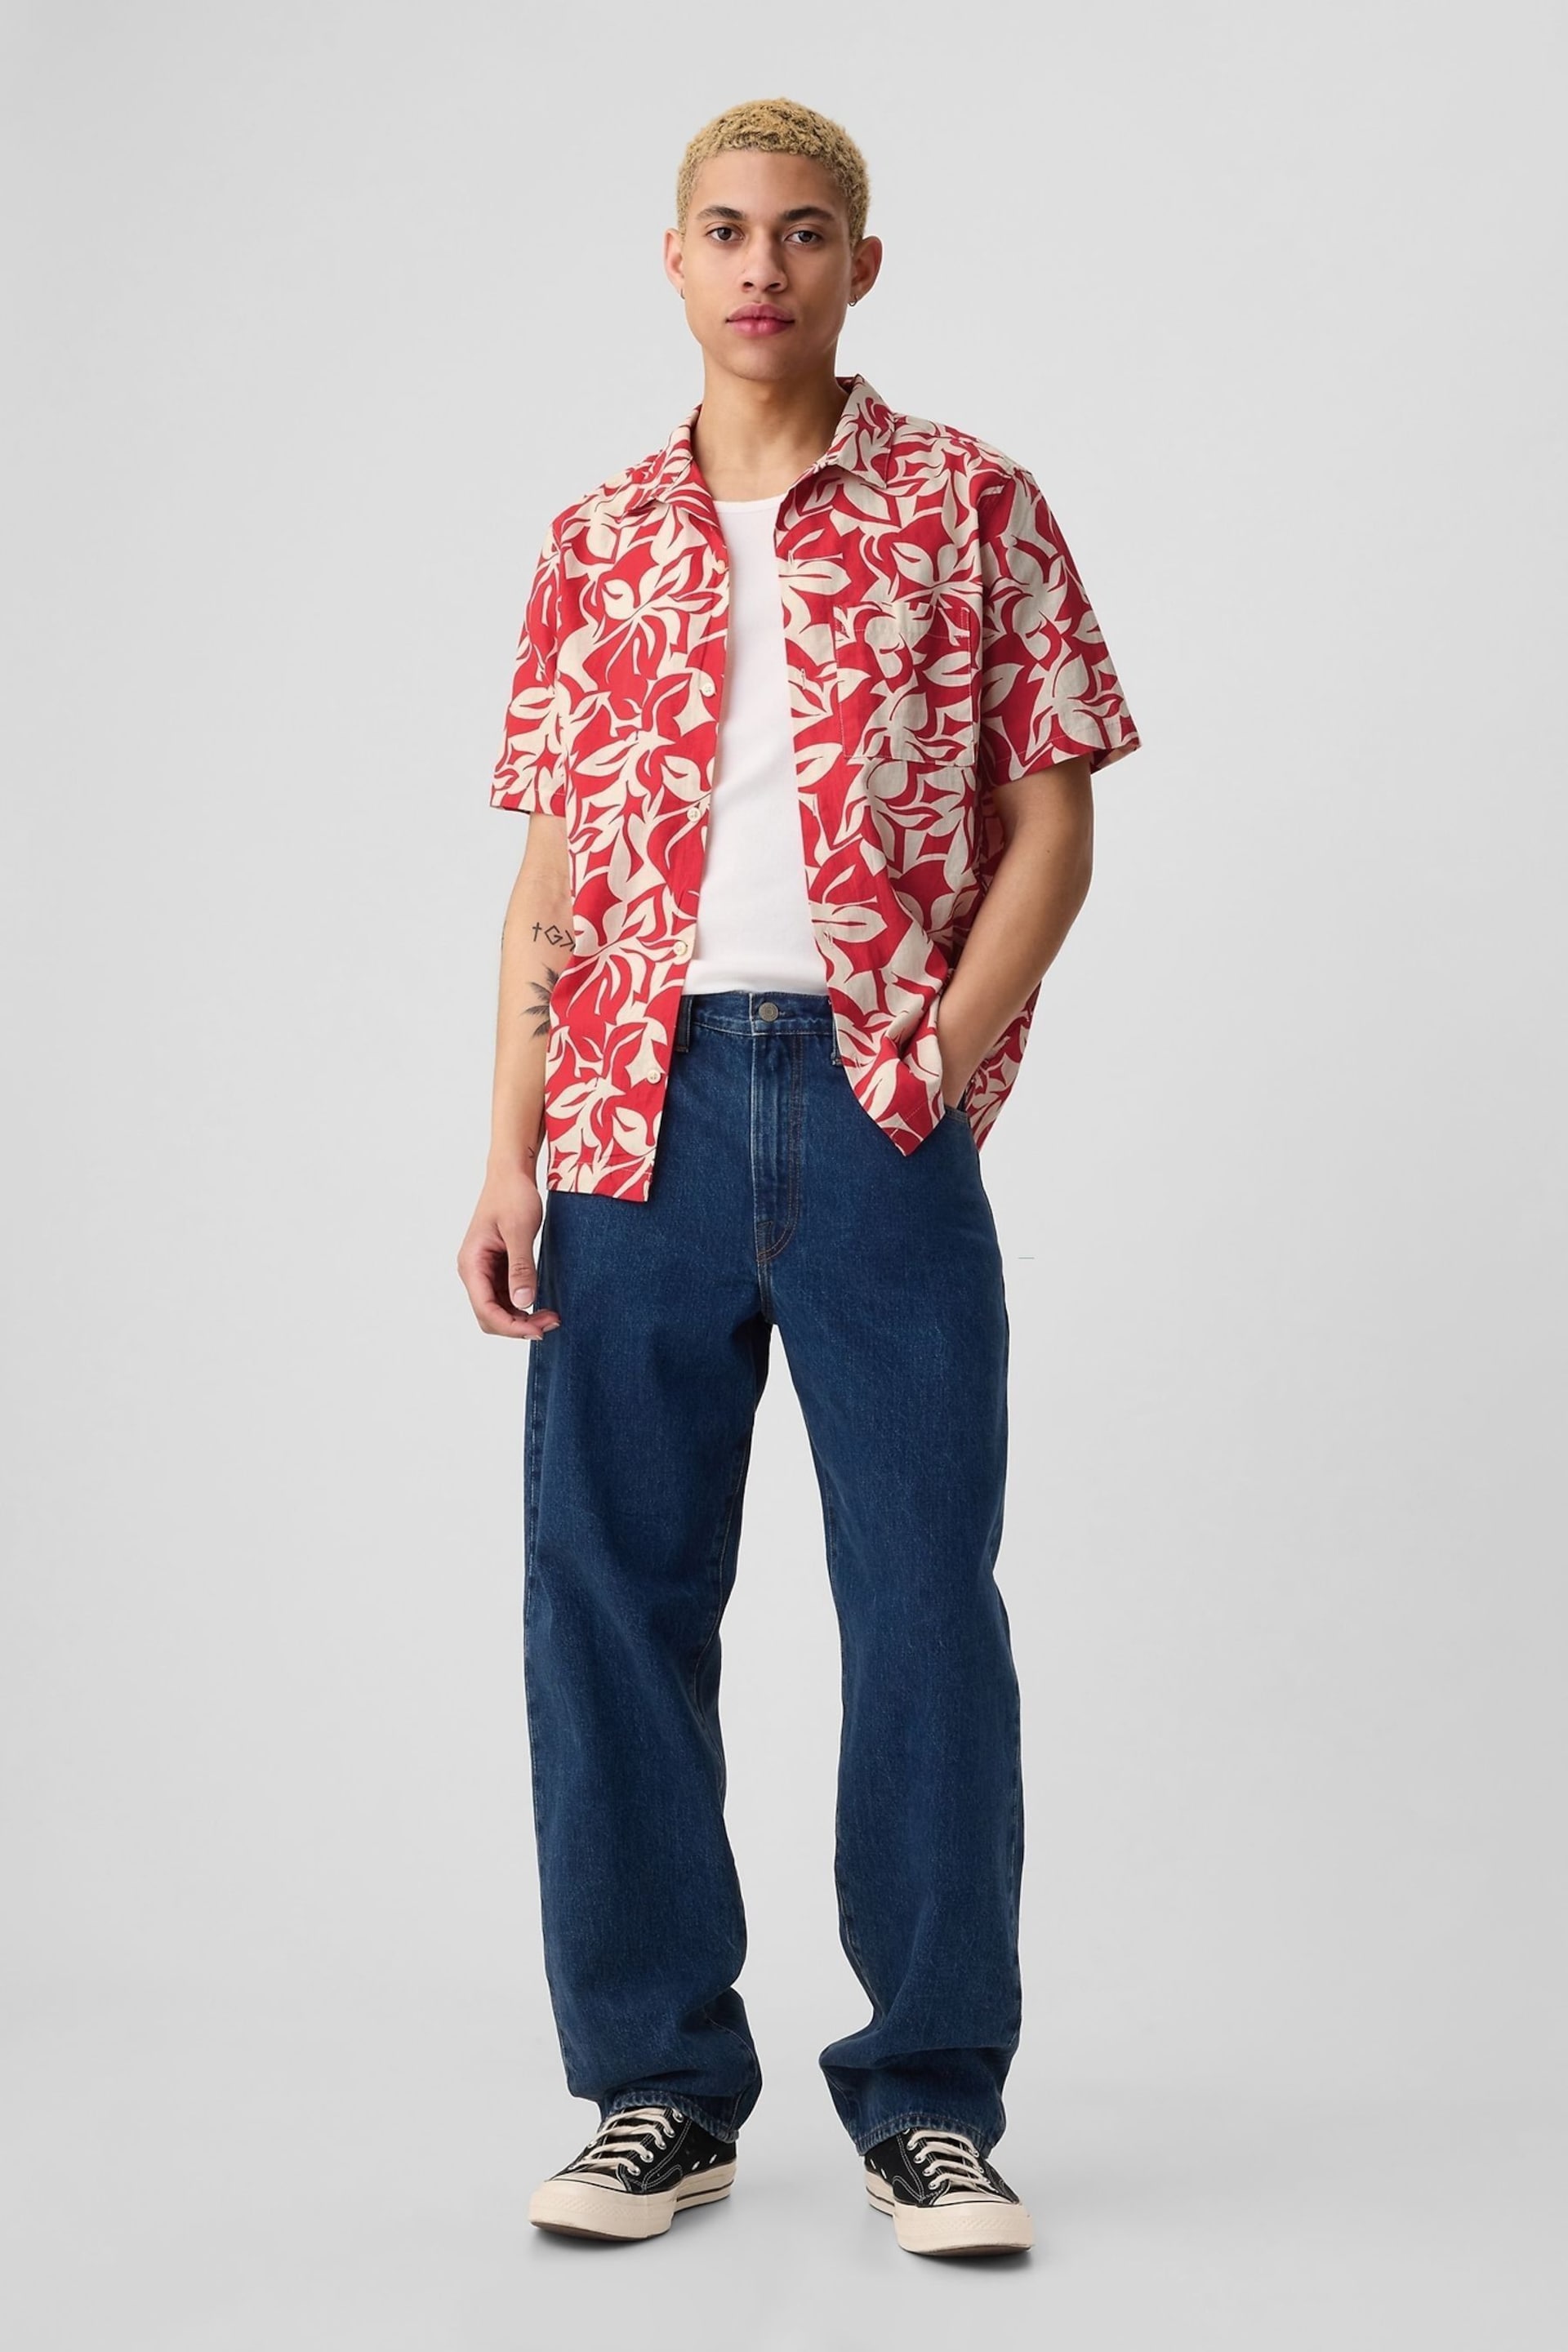 Gap Red Floral Linen Cotton Short Sleeve Shirt - Image 3 of 4